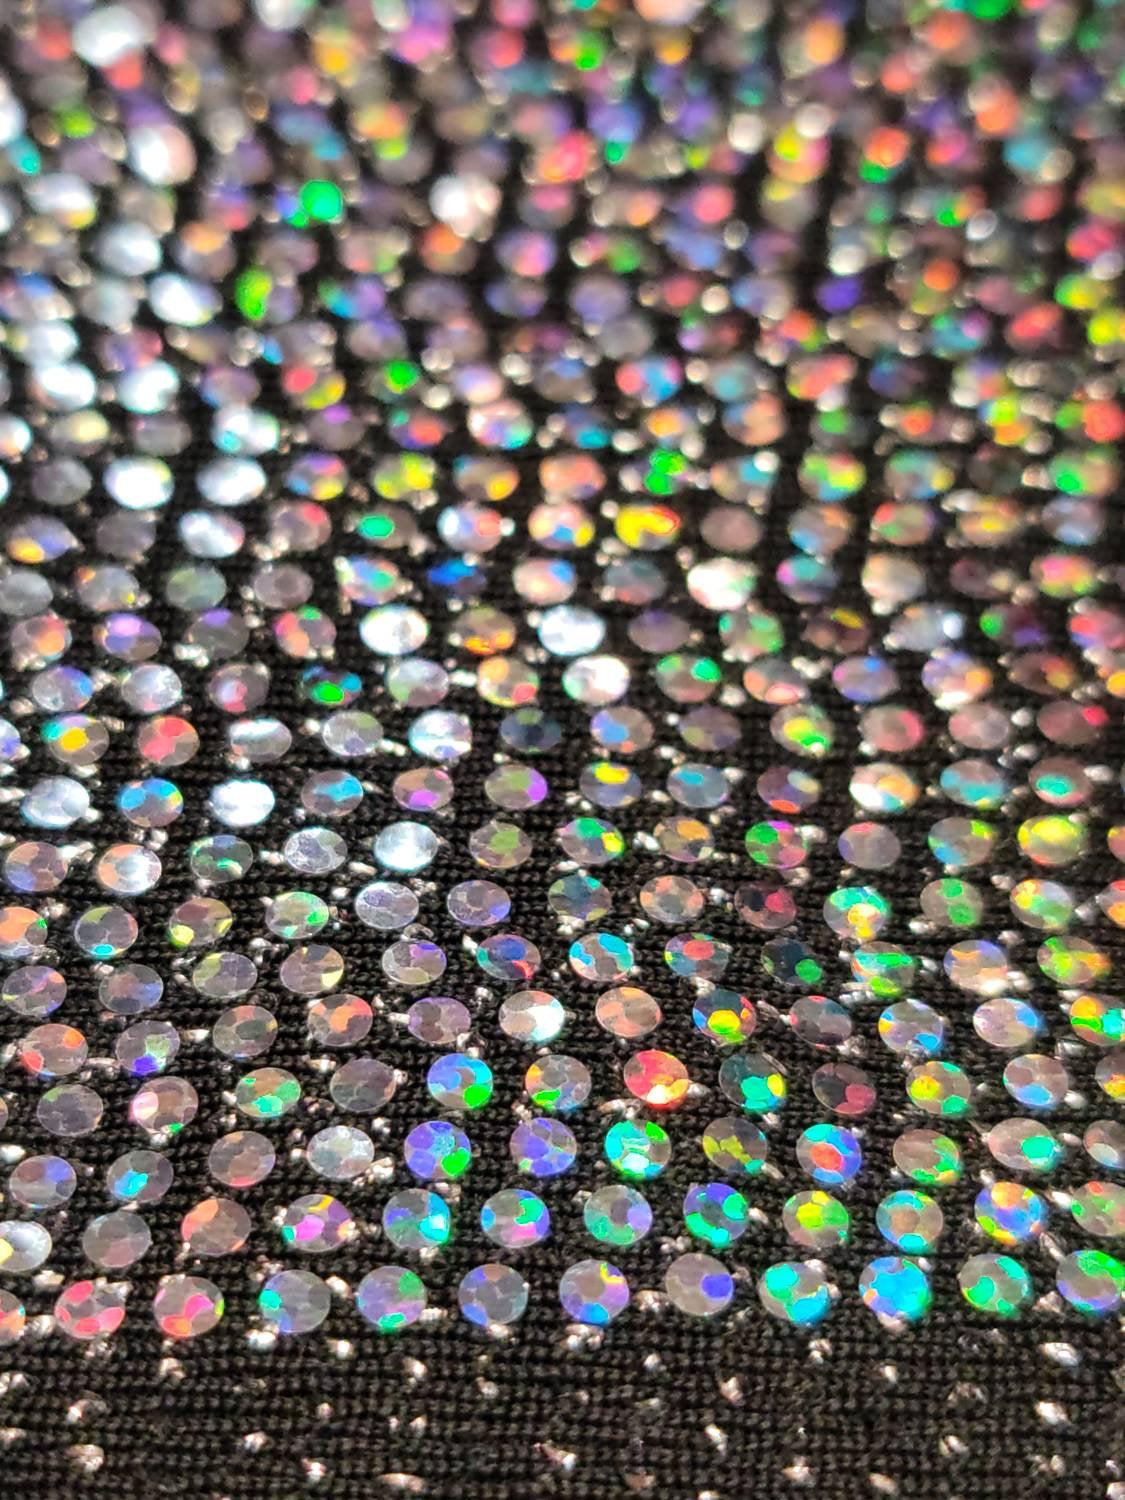 Jacket in iridescent nylon - Multi-color